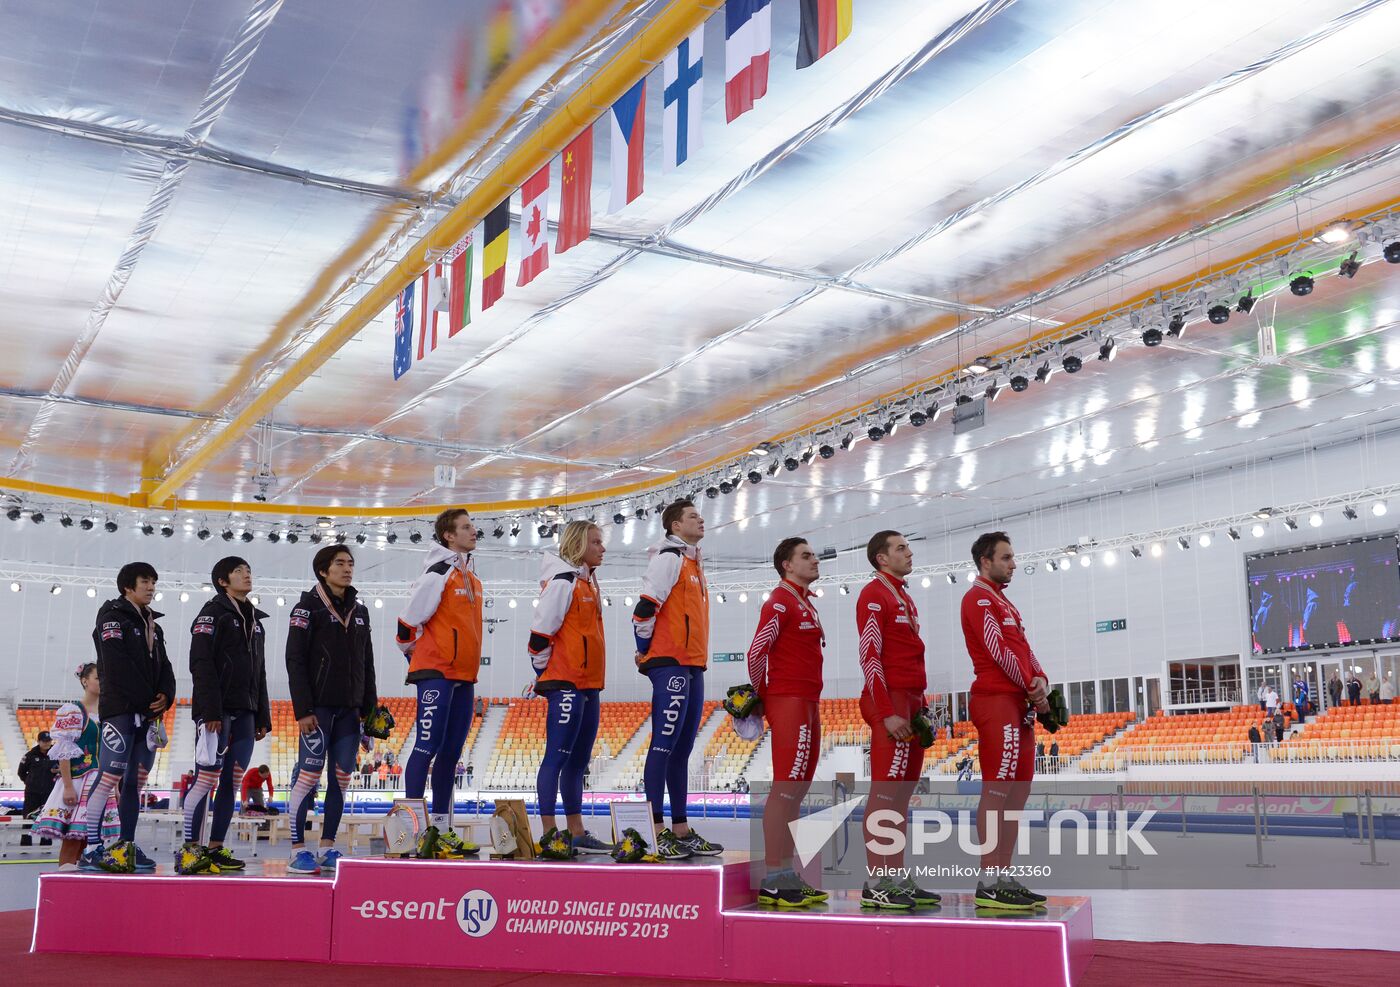 World Speed Skating Championships. Men's team race